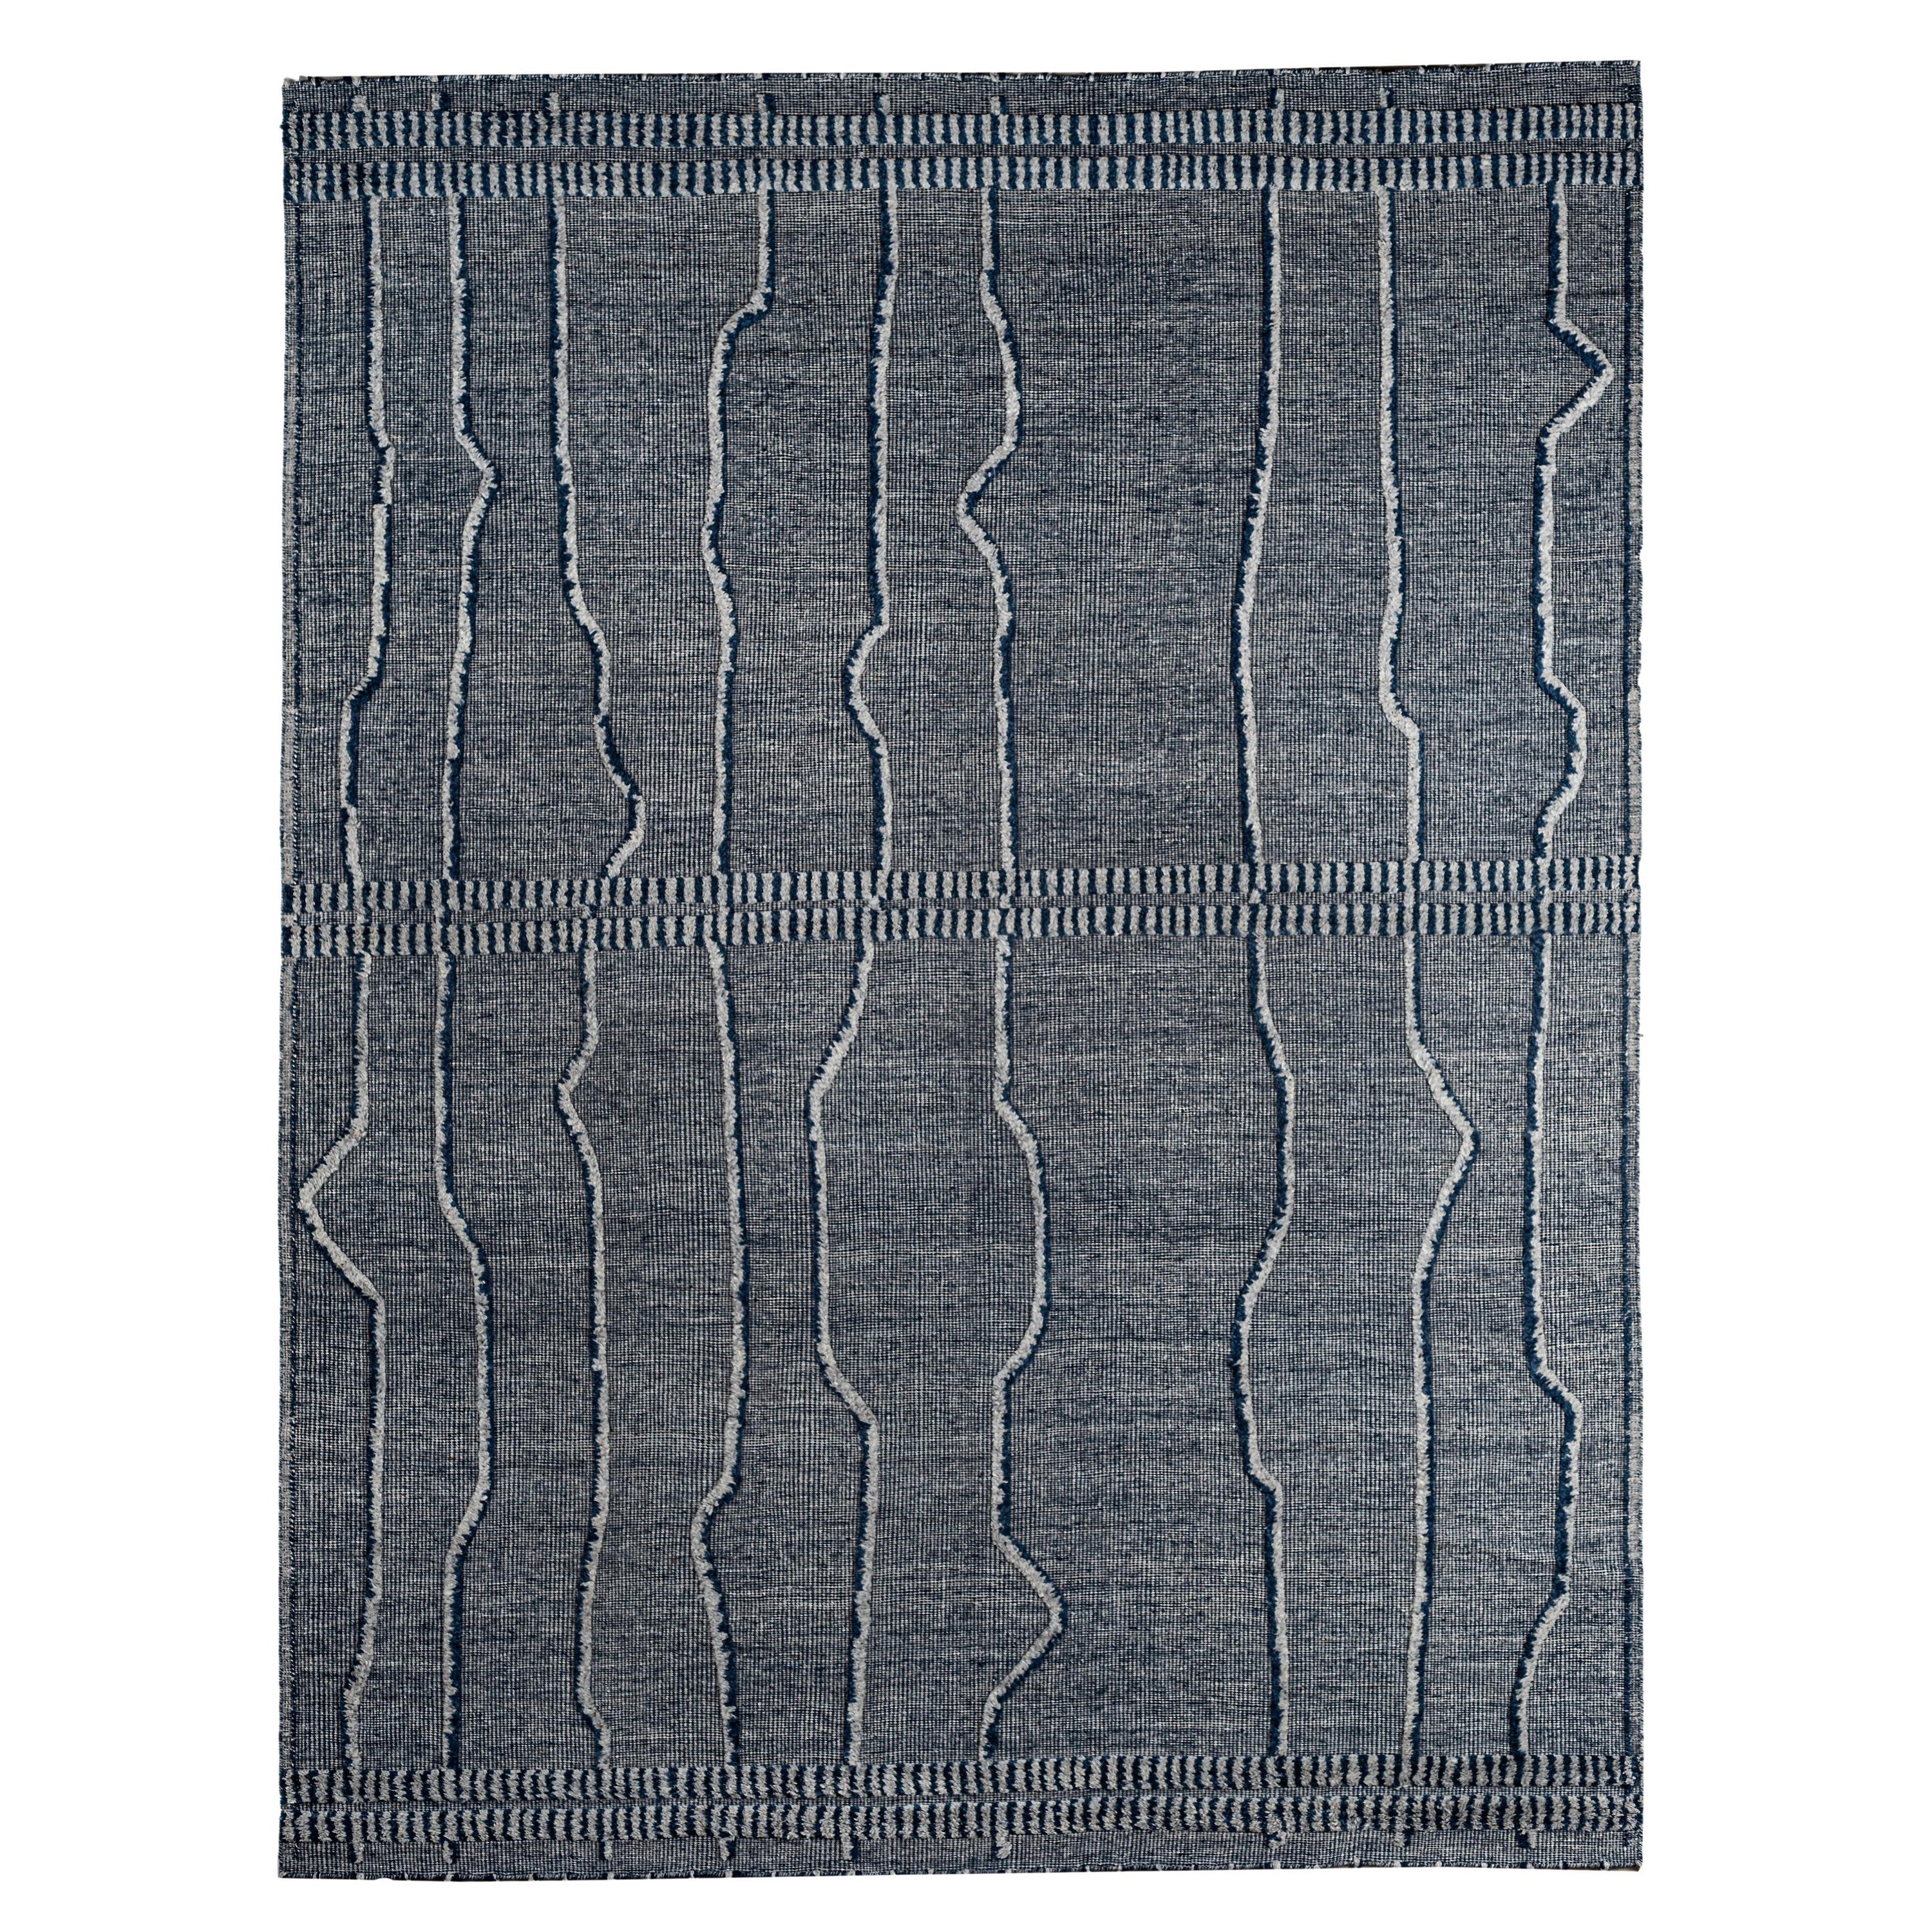 Light Grey & Navy Blue Striped Moroccan Design Area Rug